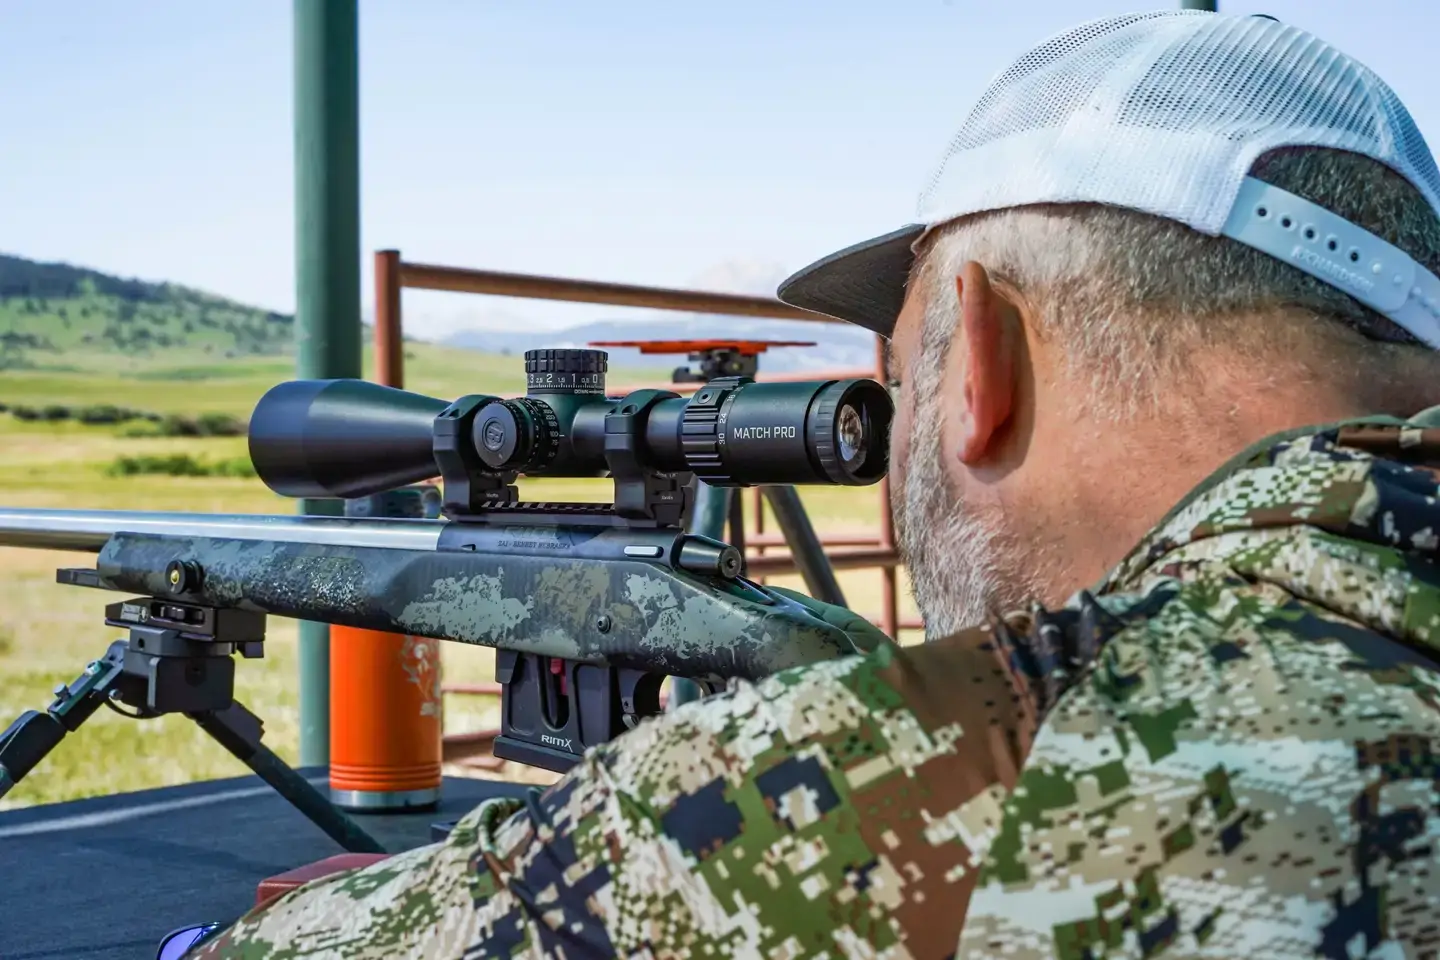 A man looks through a scope on a rifle